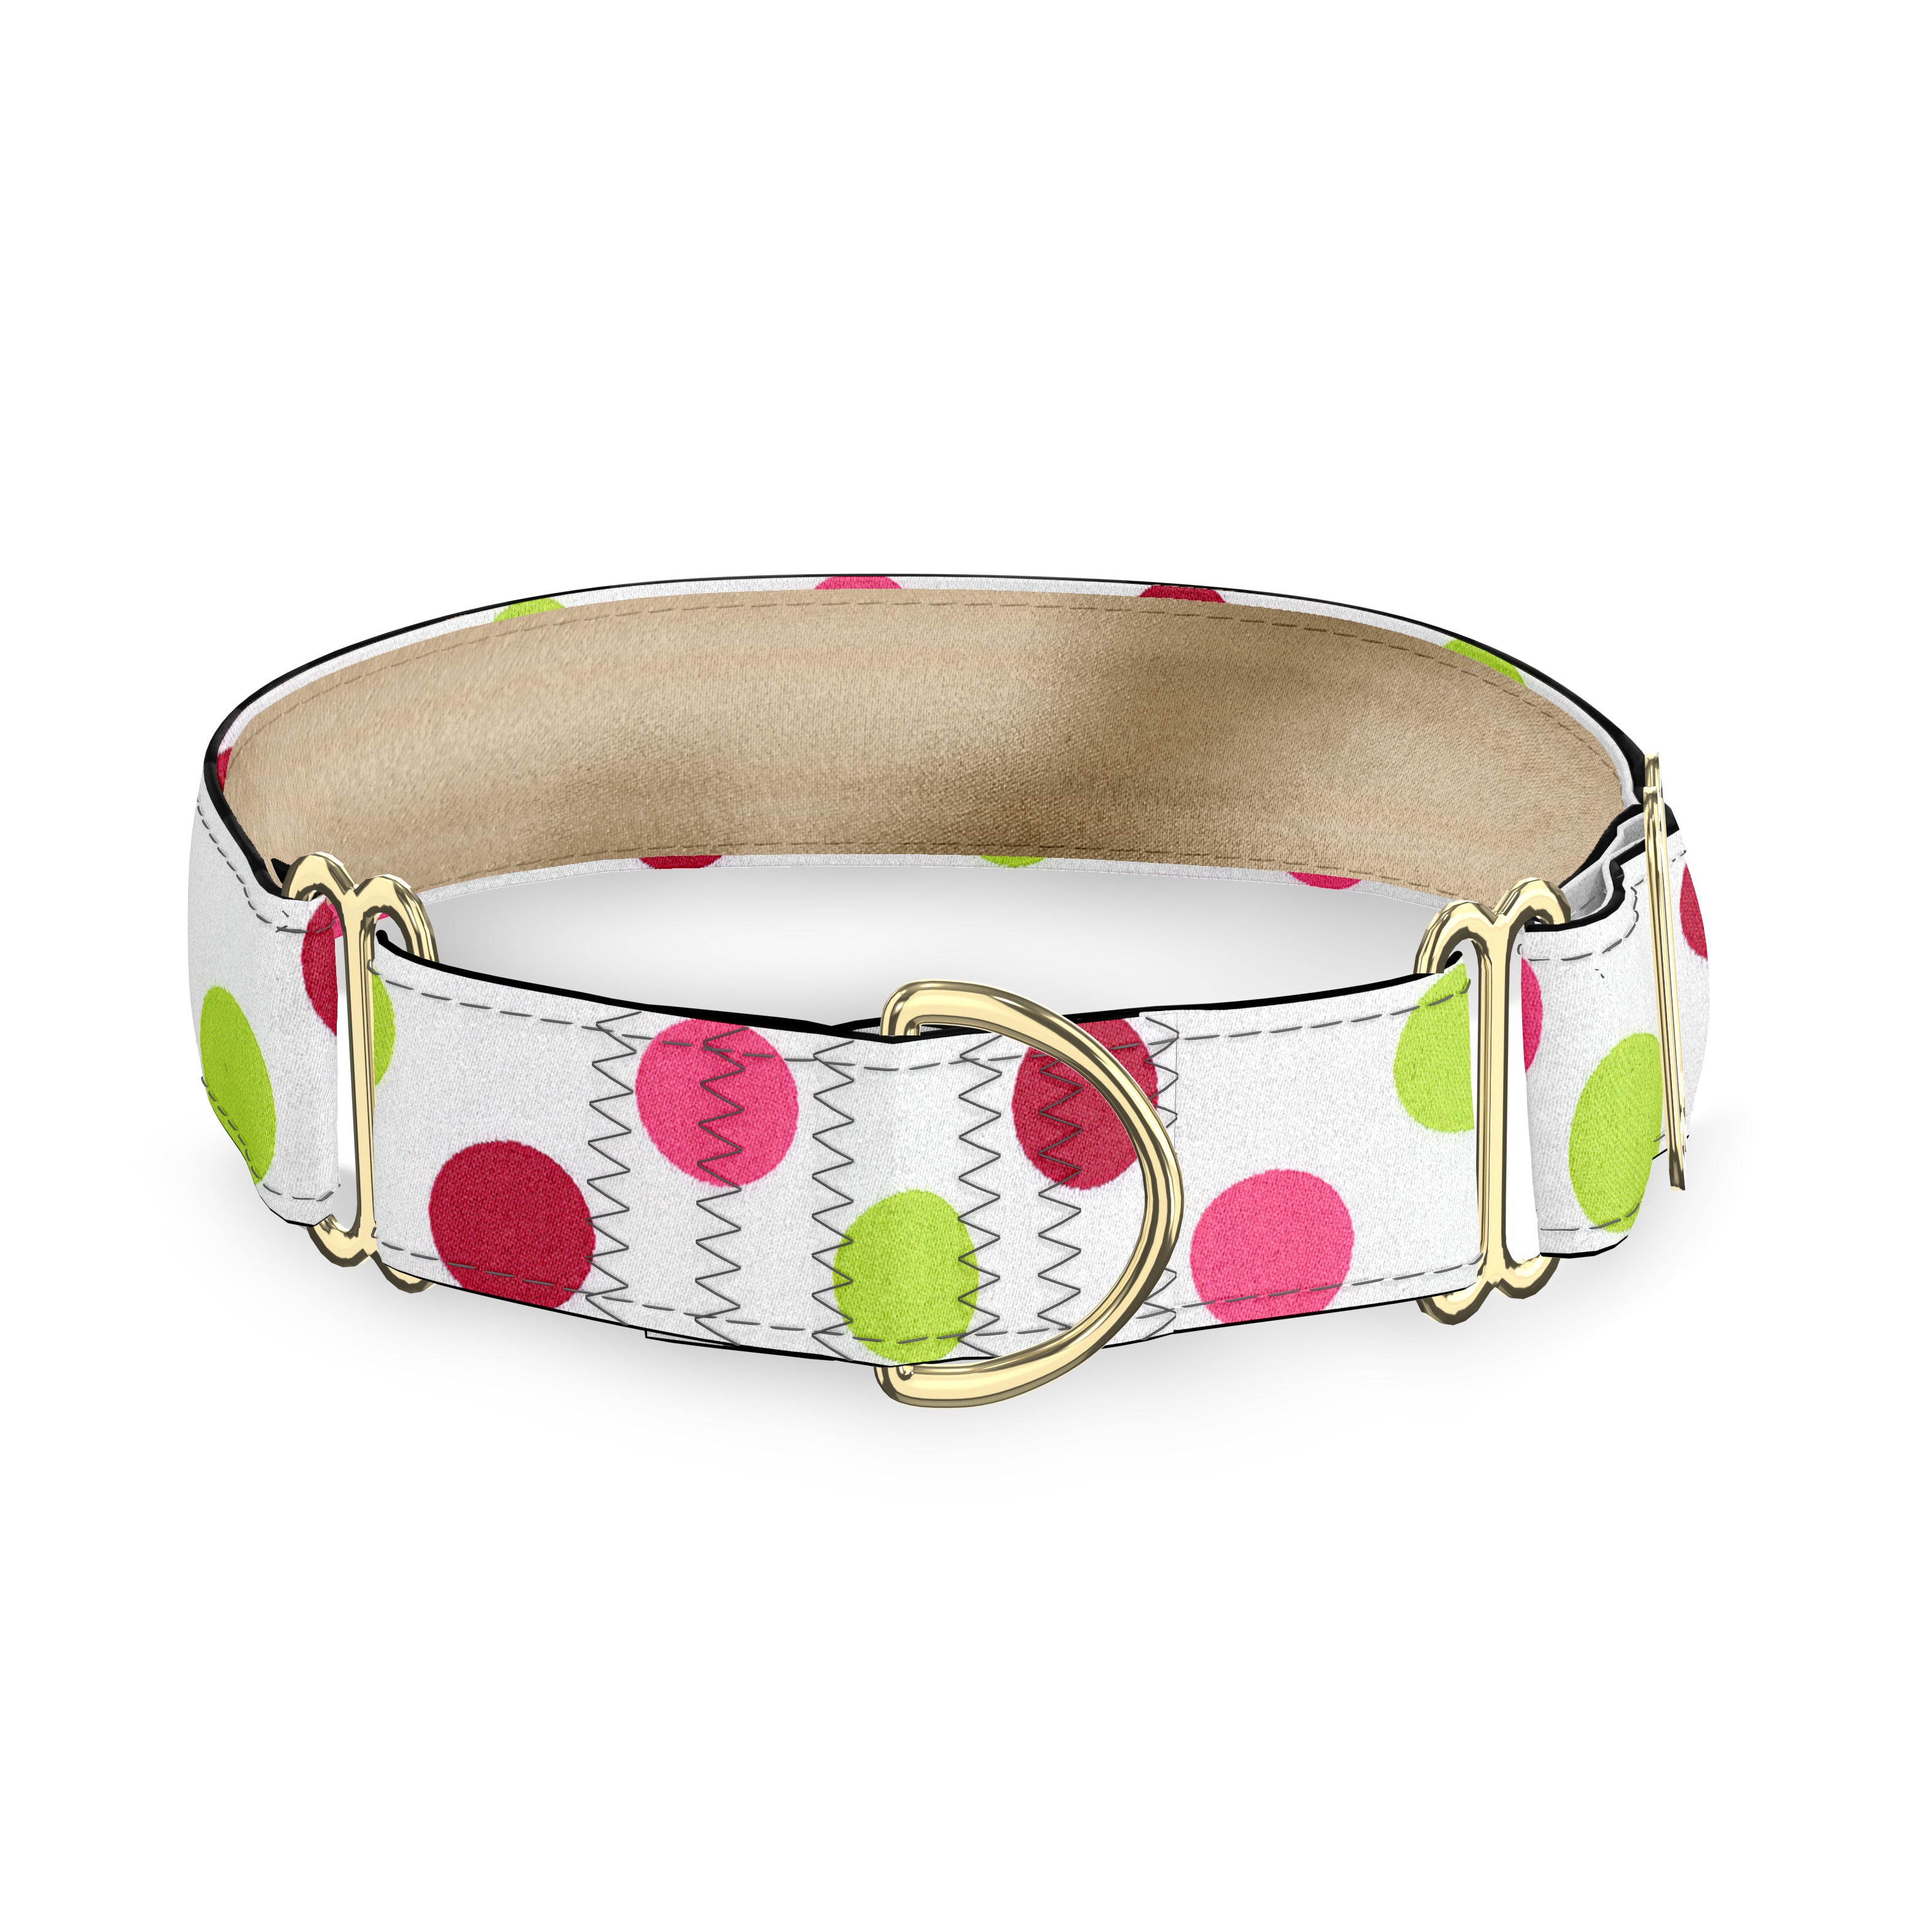 Hippodrome White, Pink and Lime Dog Collar